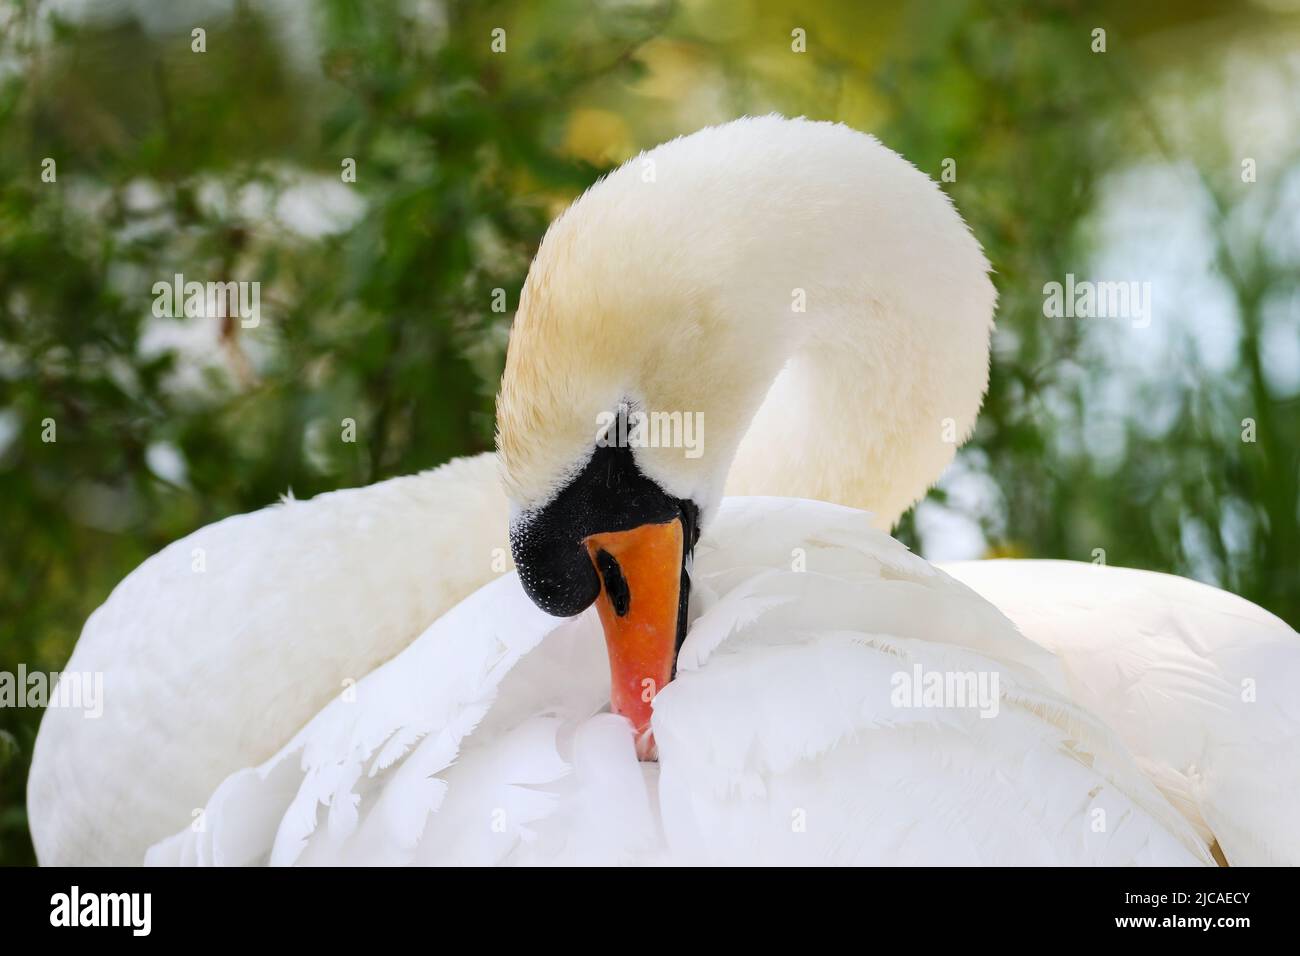 Elegant mute swan tucks its orange beak into white wing feathers. Closeup wild graceful bird 'Cygnus olor'. Blurred green background. Dublin, Ireland Stock Photo